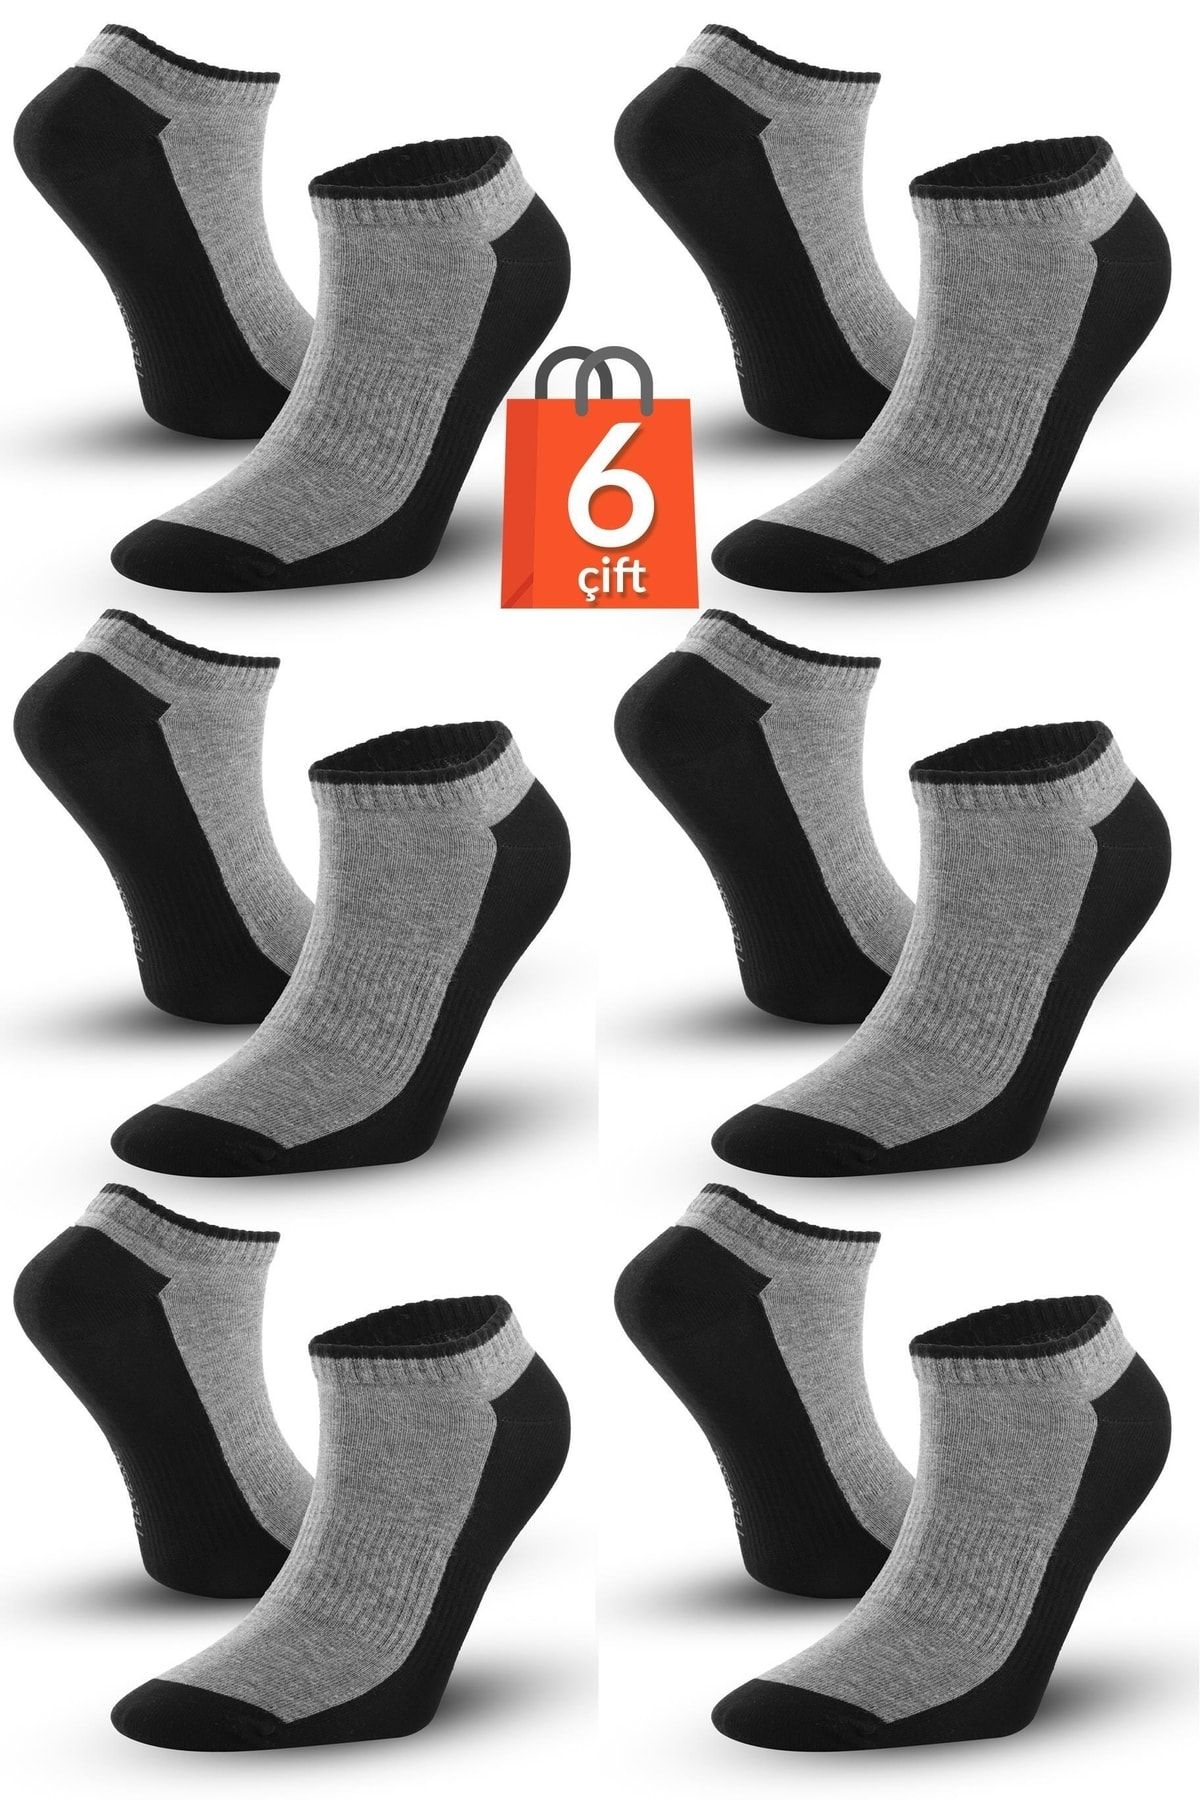 Telvesse 6 Çift Marcher Dikişsiz Patik Çorap Spor Kısa Çift Renkli Kısa Konç Spor Çorabı Siyah-gri